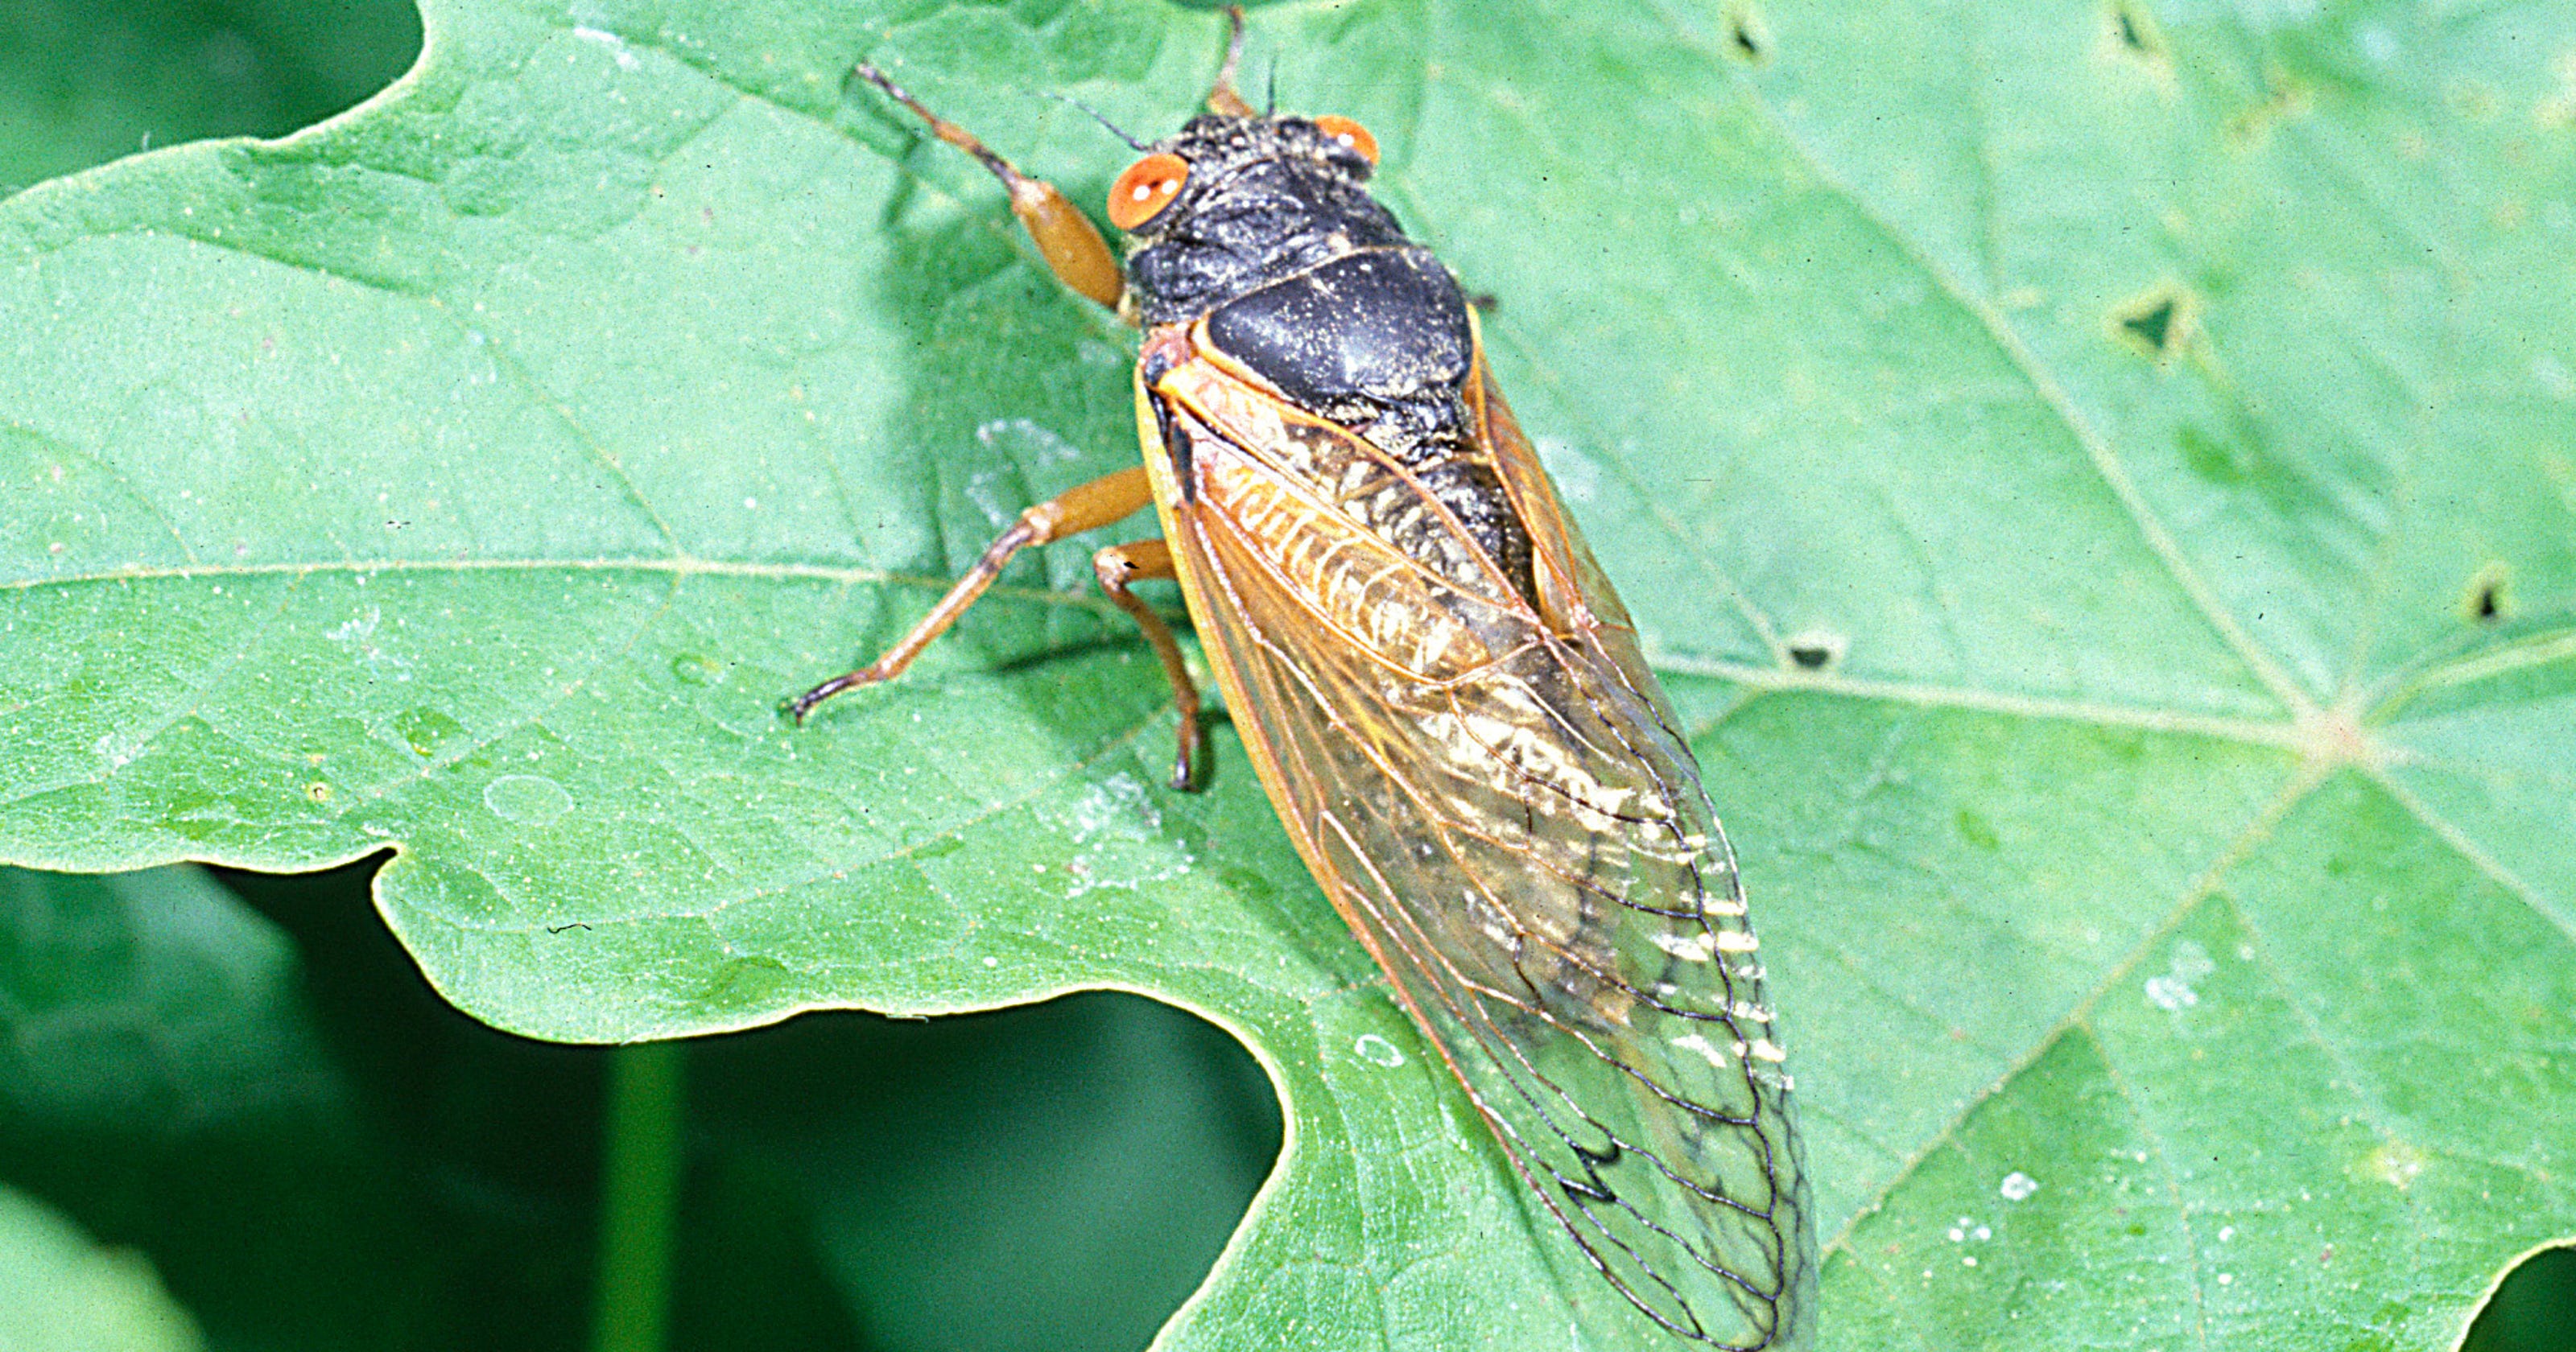 Cicada emergence to split North Central Ohio